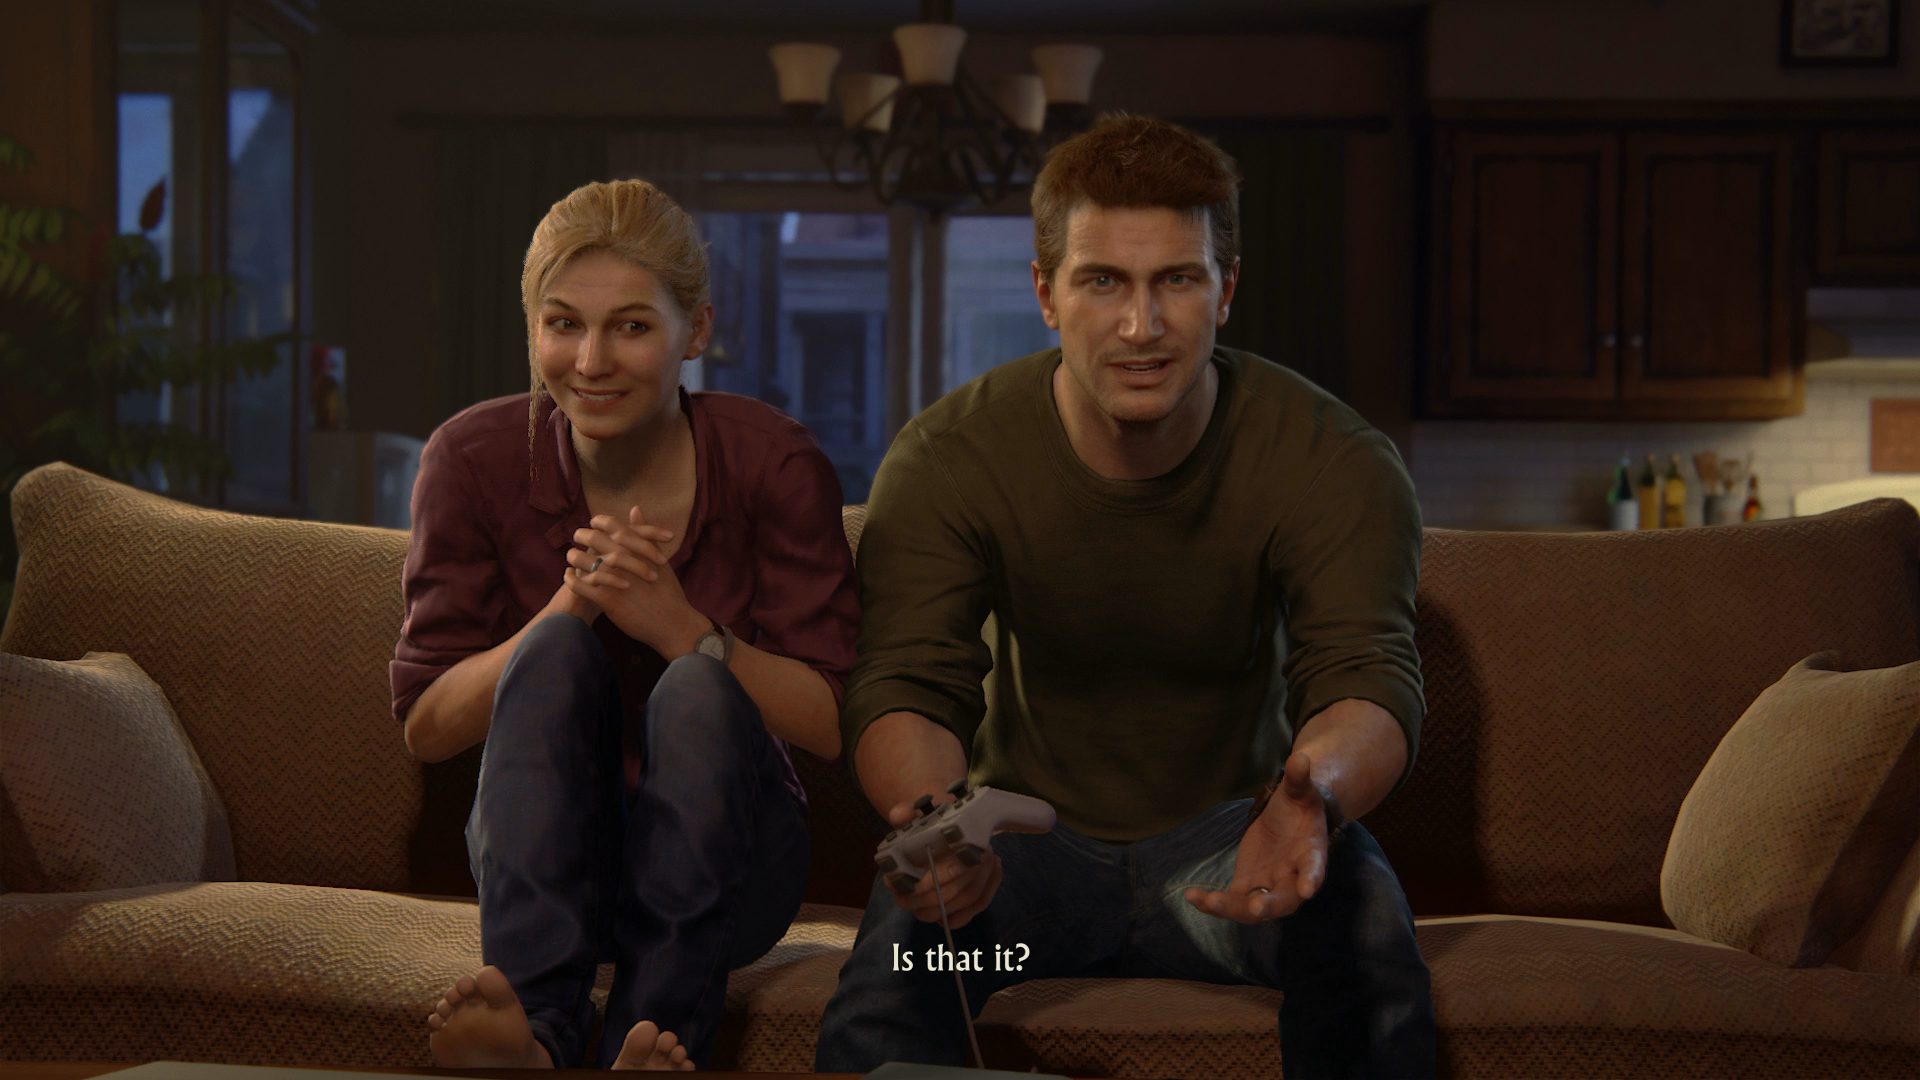 Personagens de Uncharted: The Lost Legacy a caminho do multijogador de Uncharted  4